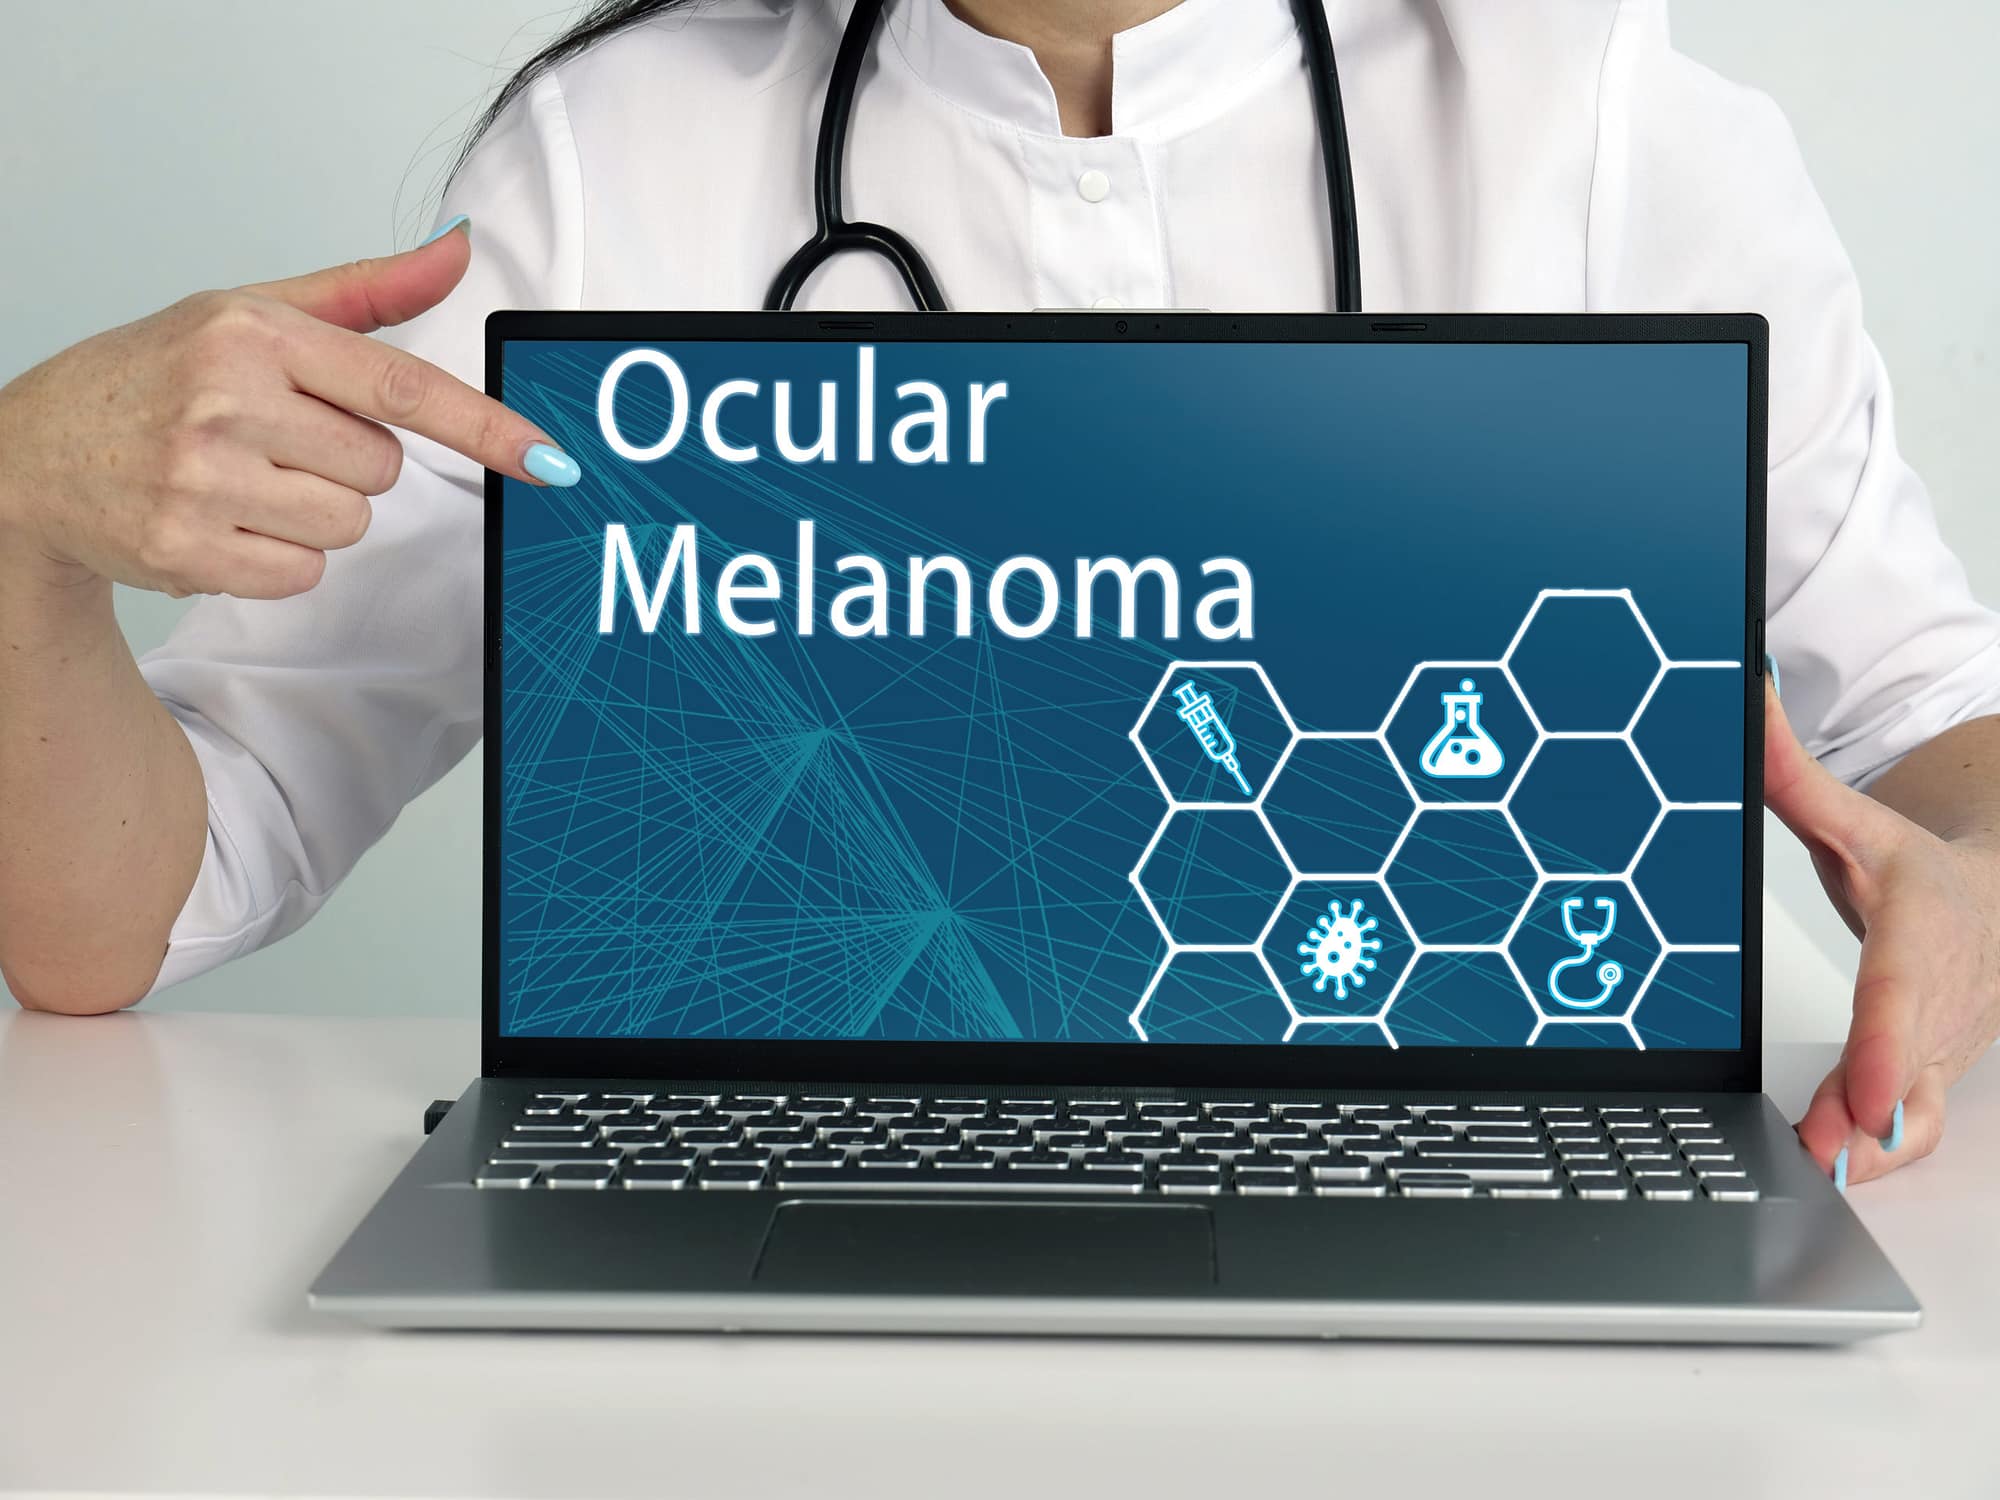 Ocular Melanoma phrase on the screen. Neurologist use cell tech